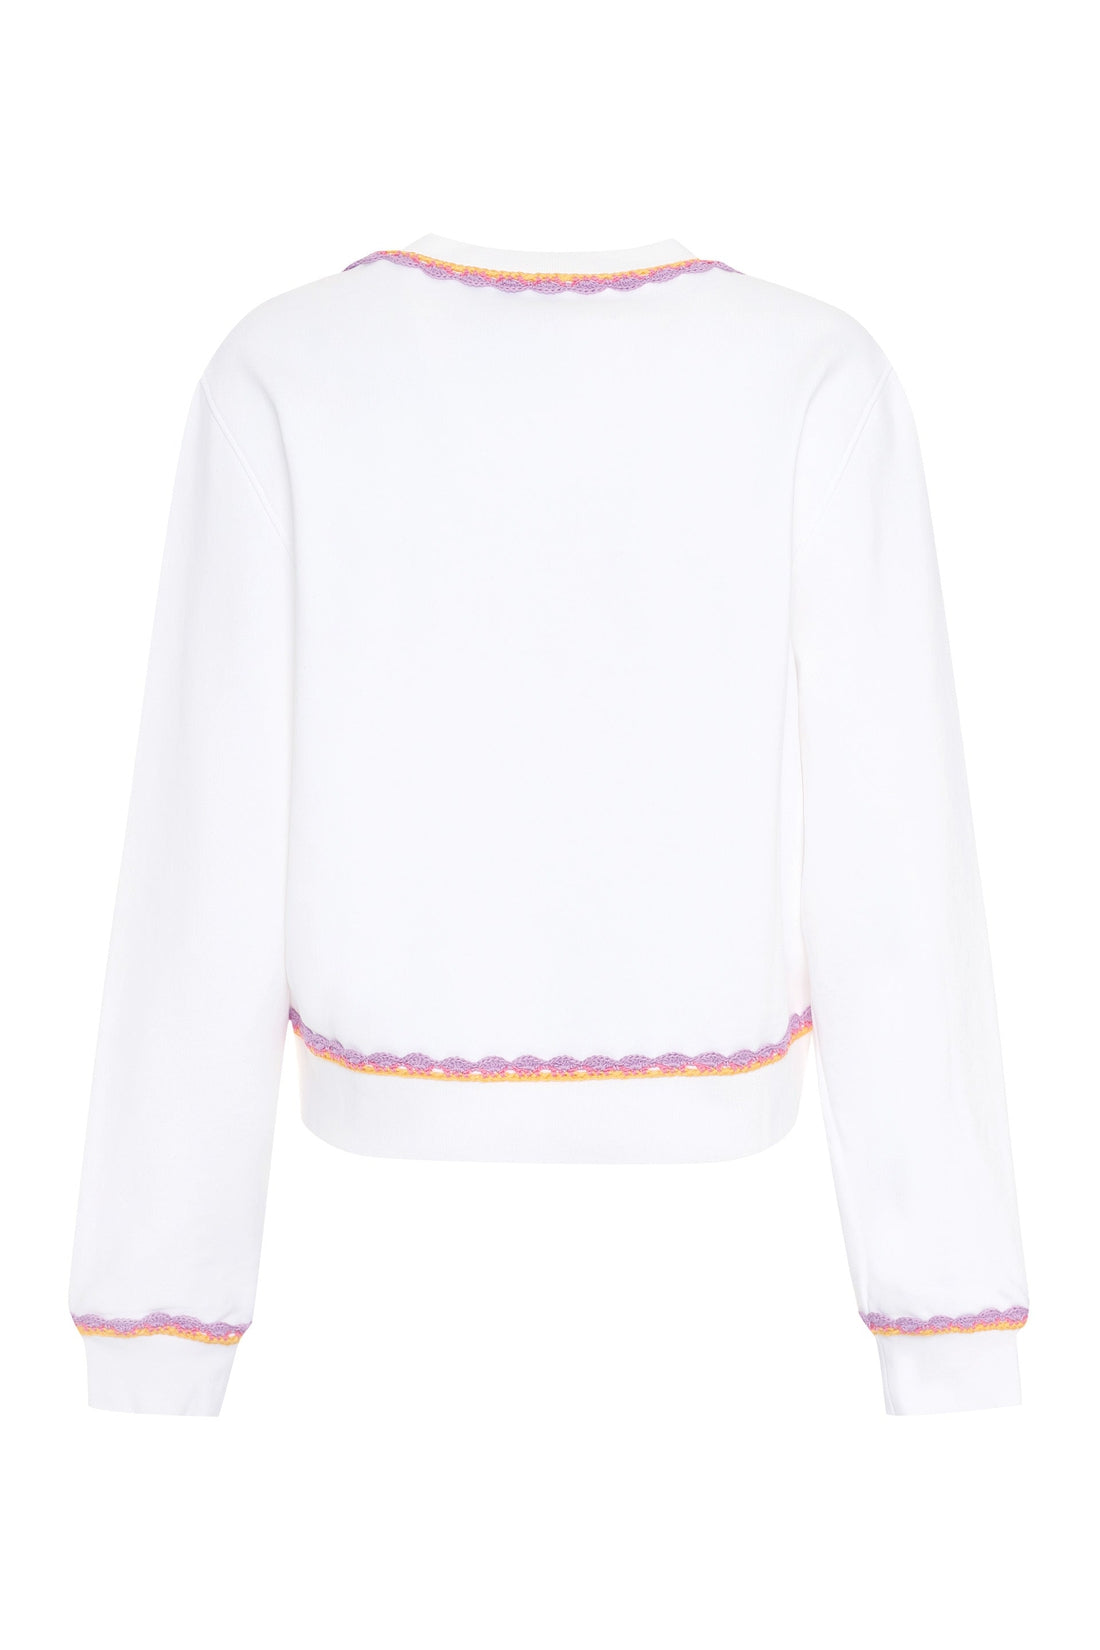 Moschino-OUTLET-SALE-Logo detail cotton sweatshirt-ARCHIVIST